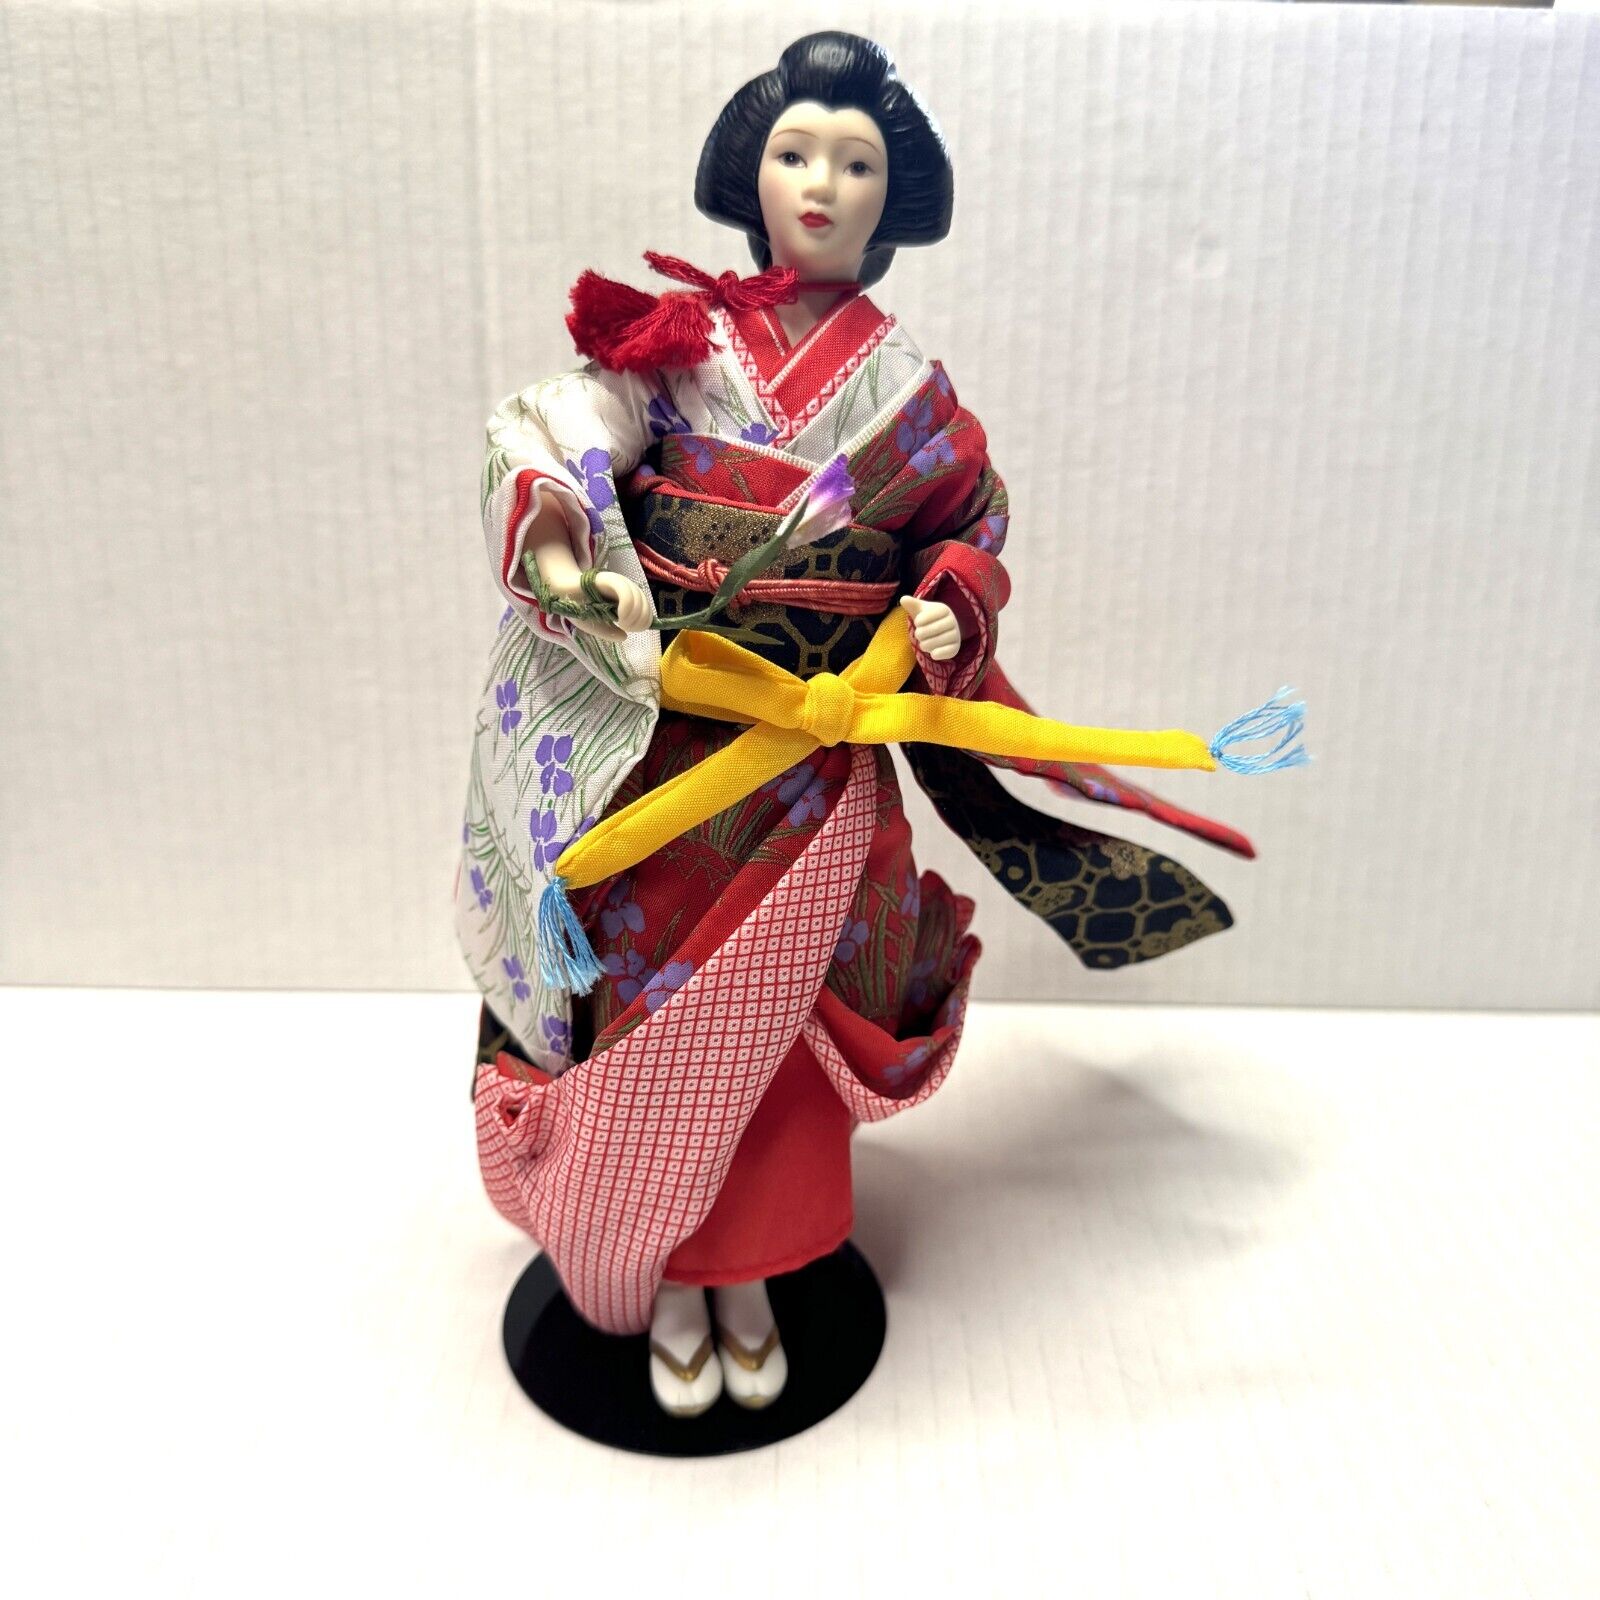 1990 Avon International Porcelain Doll Masako Japan Figurine with Original Box